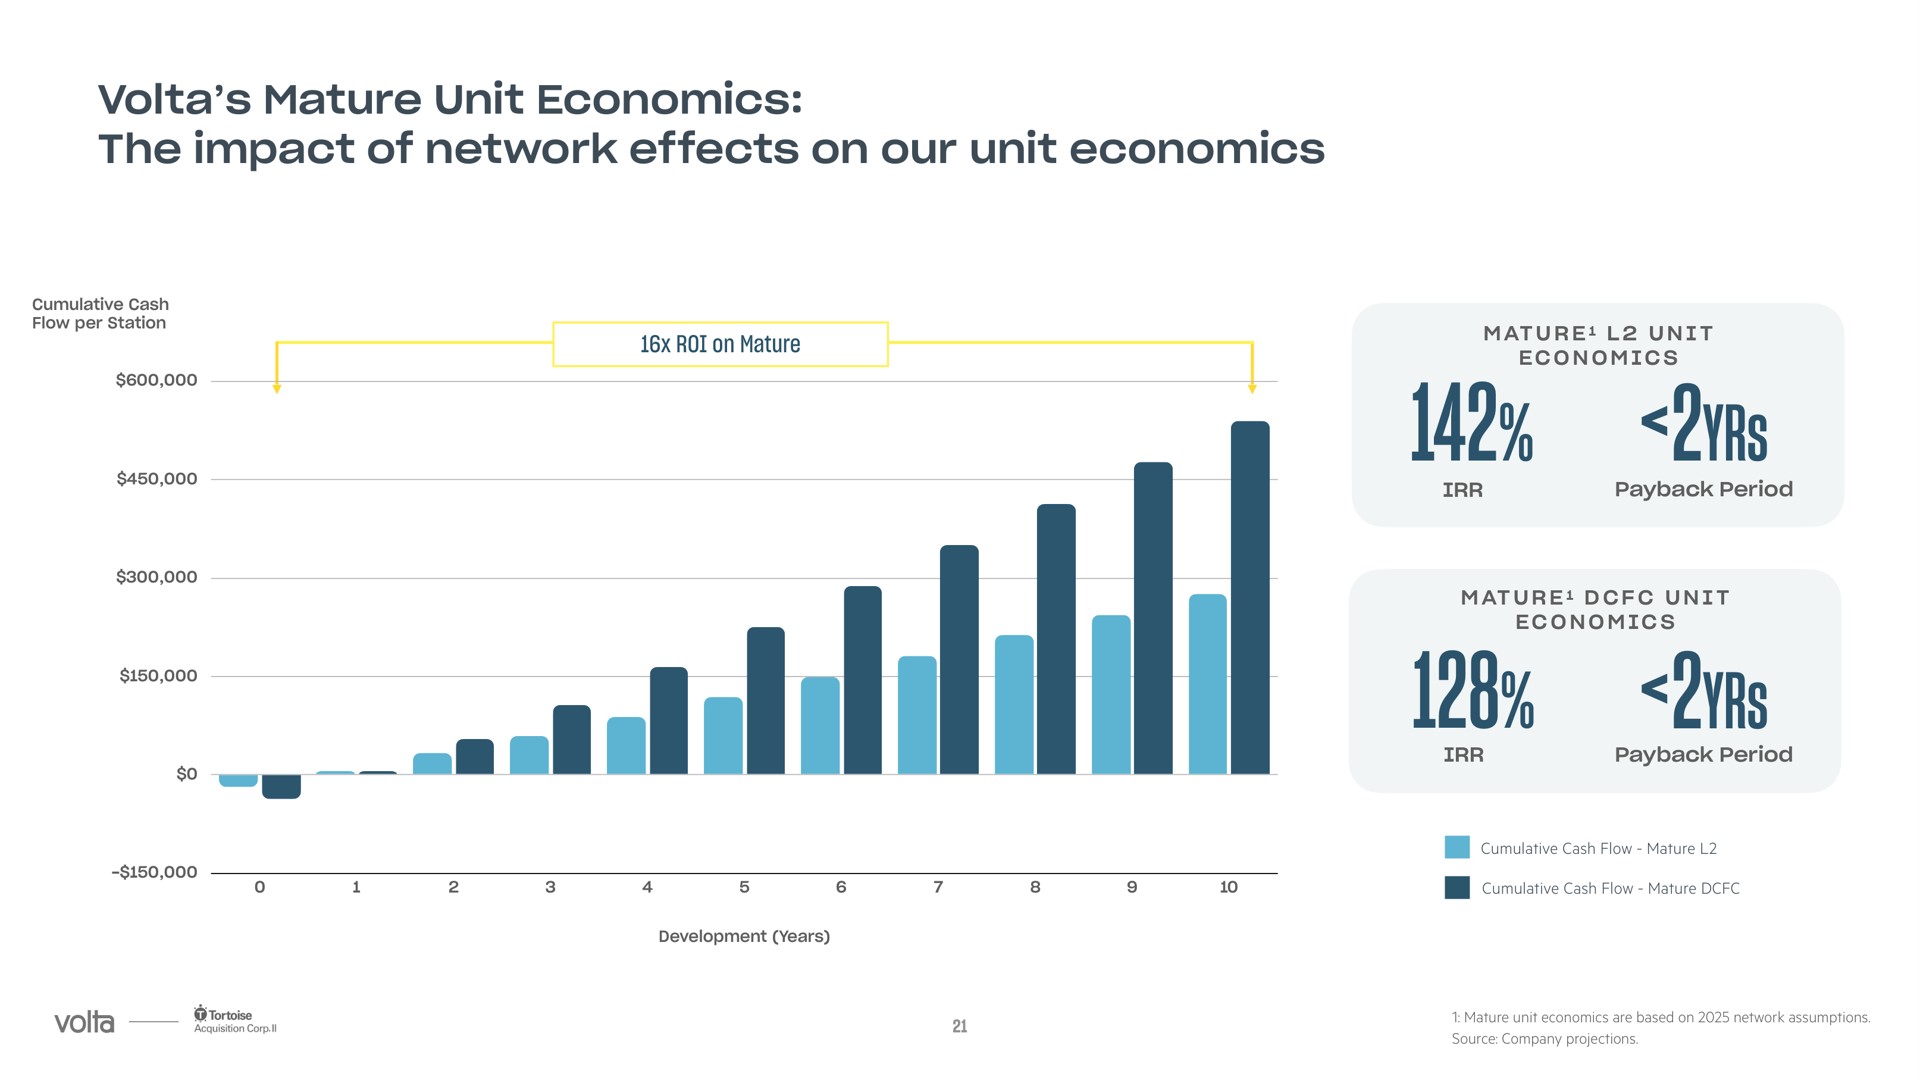 mature unit economics the impact of network effects on our unit economics yrs yrs | Volta